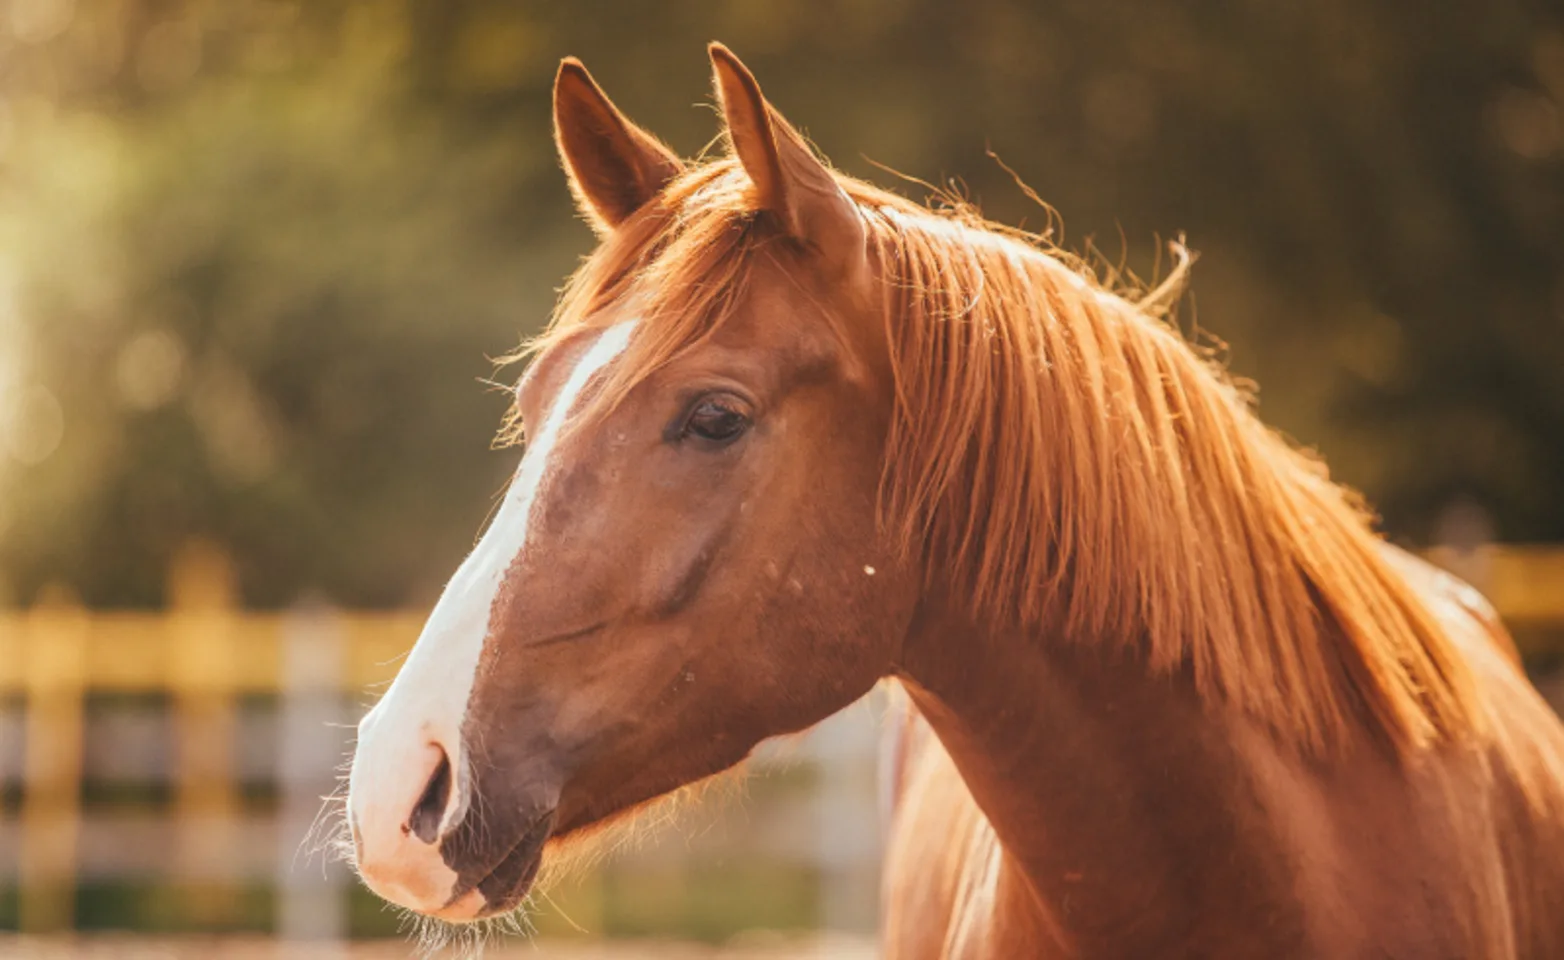 Brown rural horse in sun